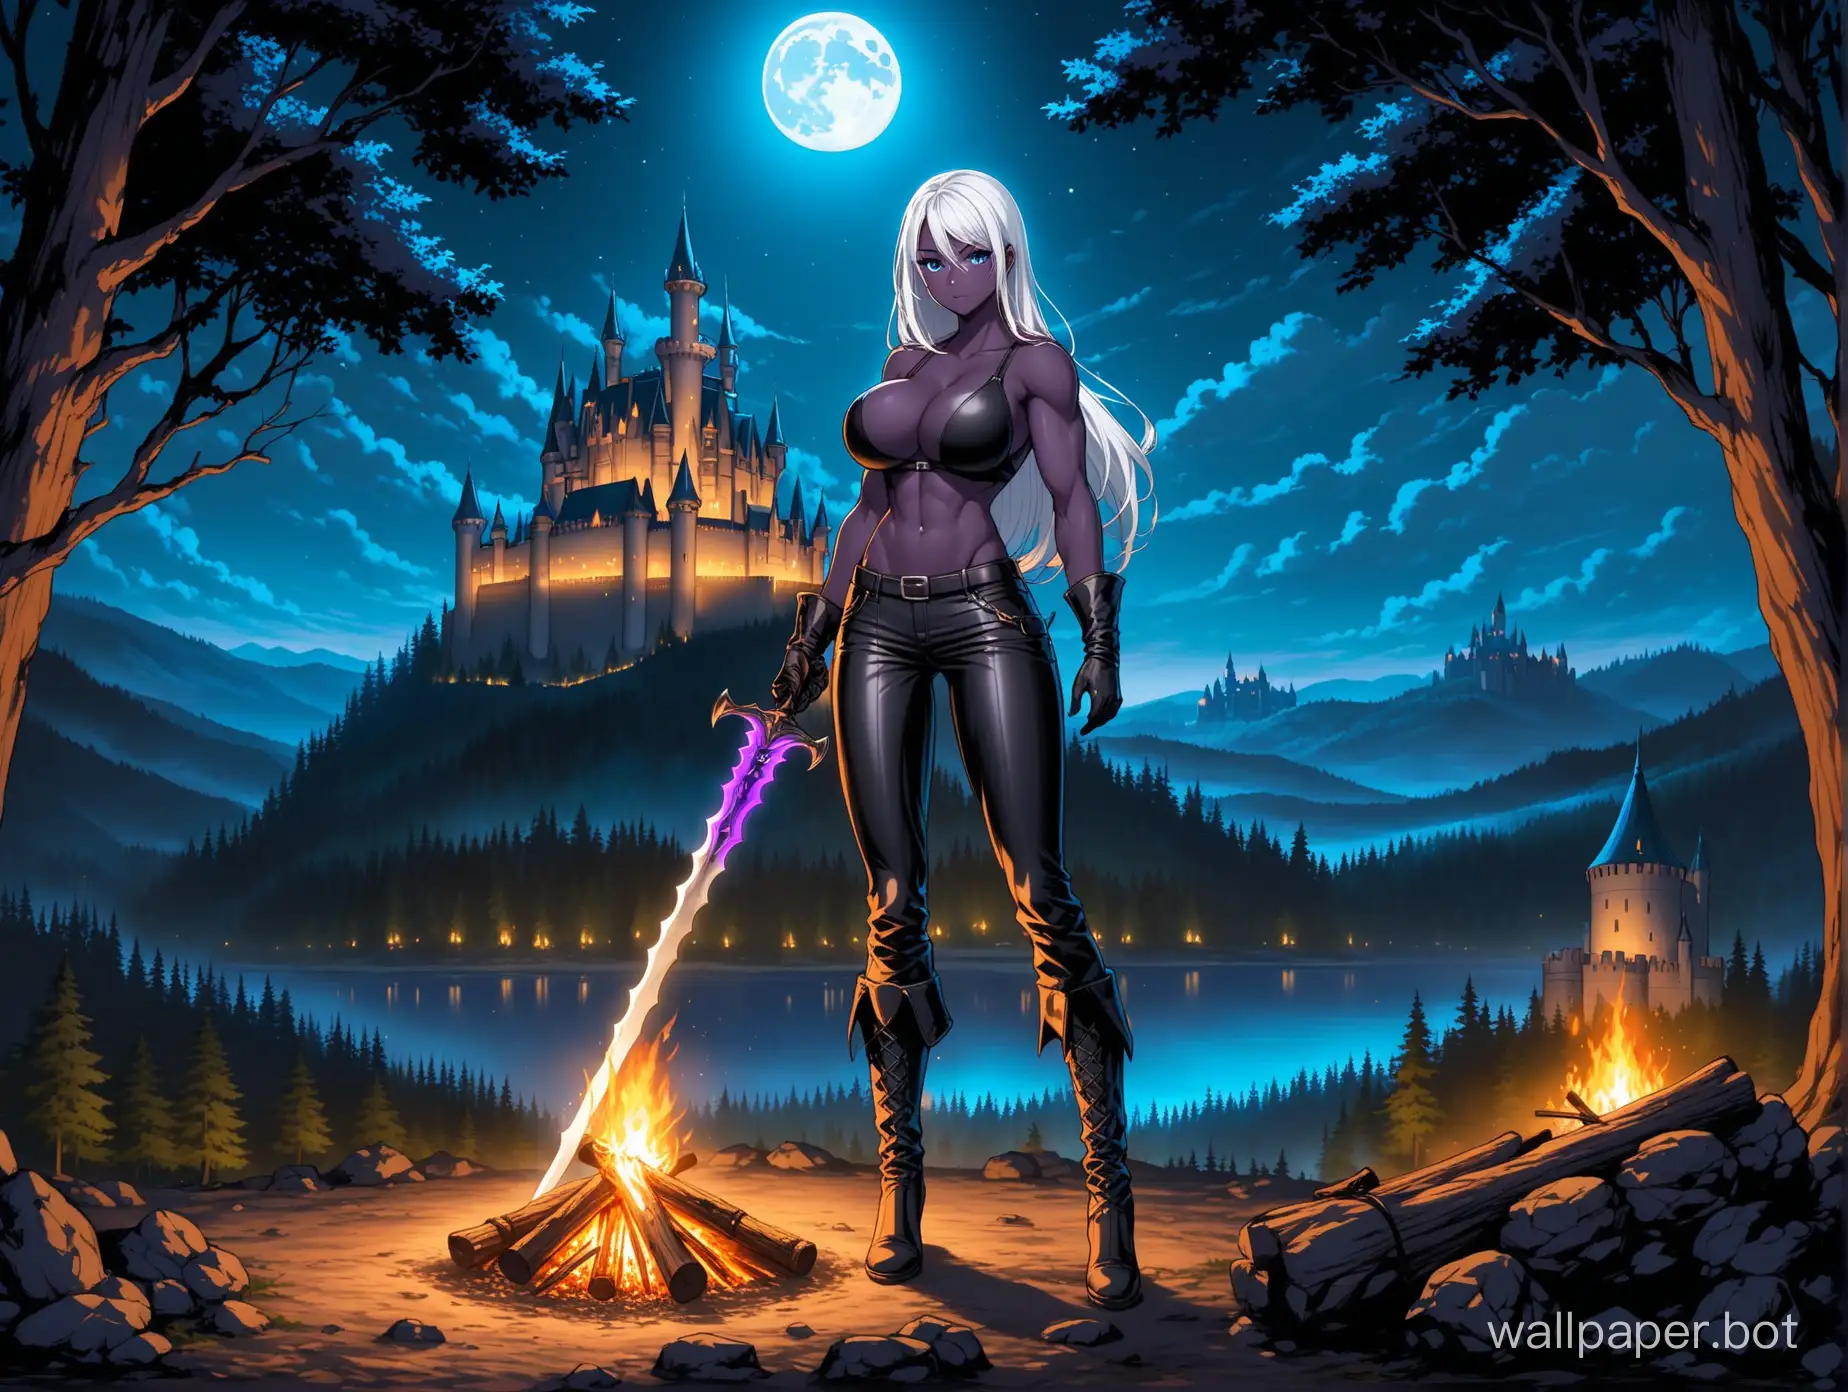 Dark-Purple-Warrior-Woman-with-Greatsword-by-Night-in-Forest